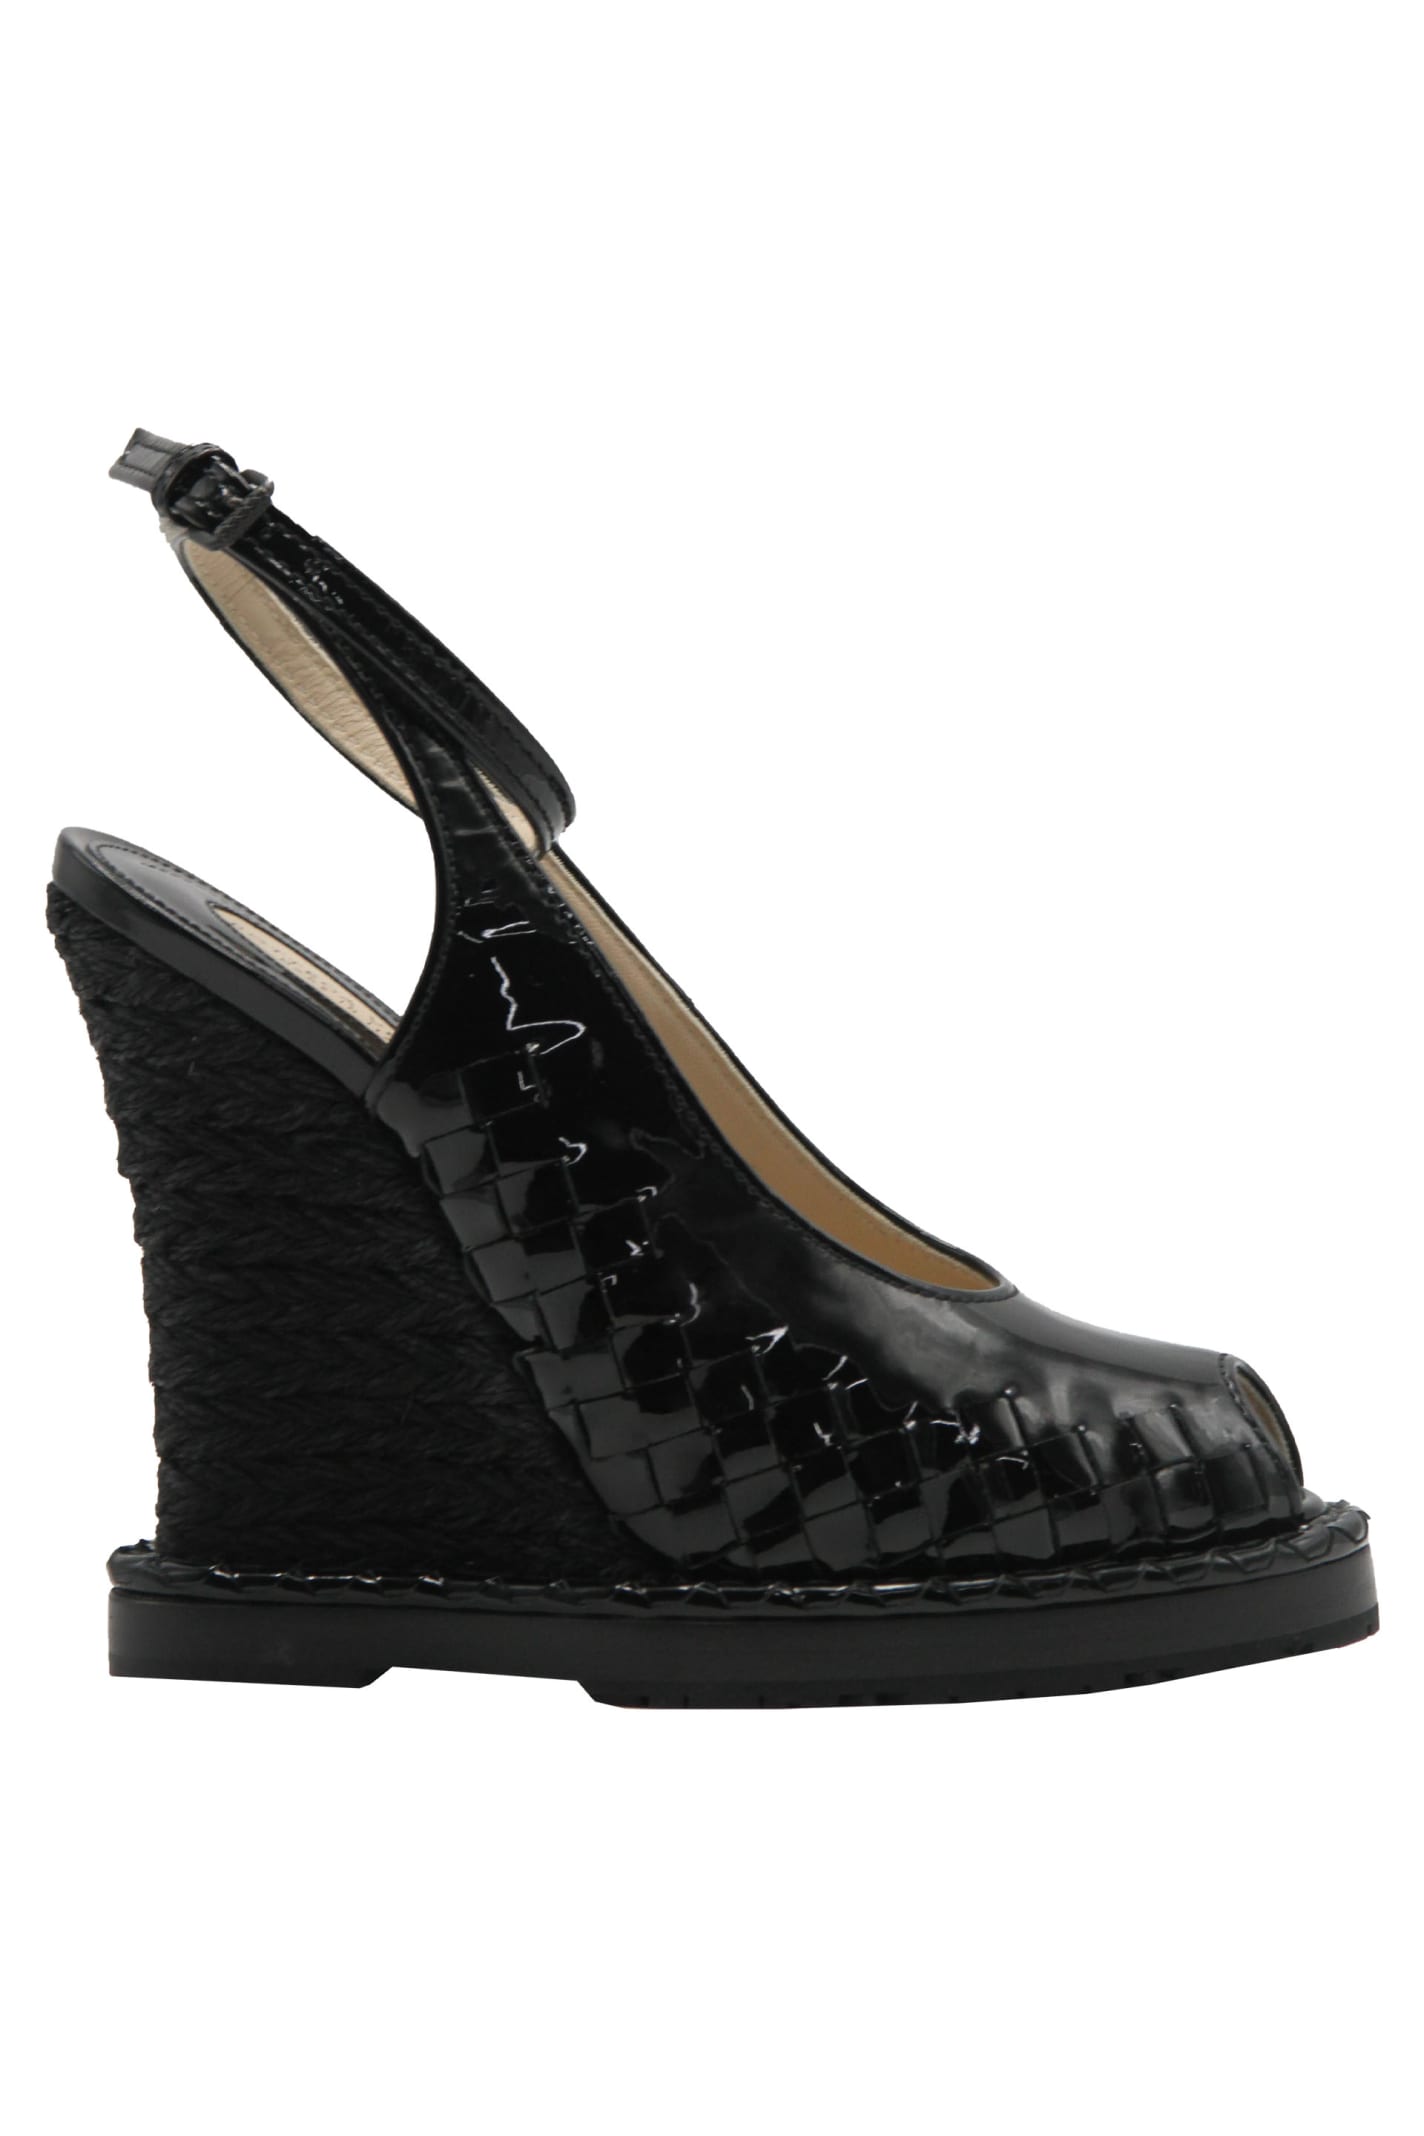 Bottega Veneta Patent Platform Sandals In Black